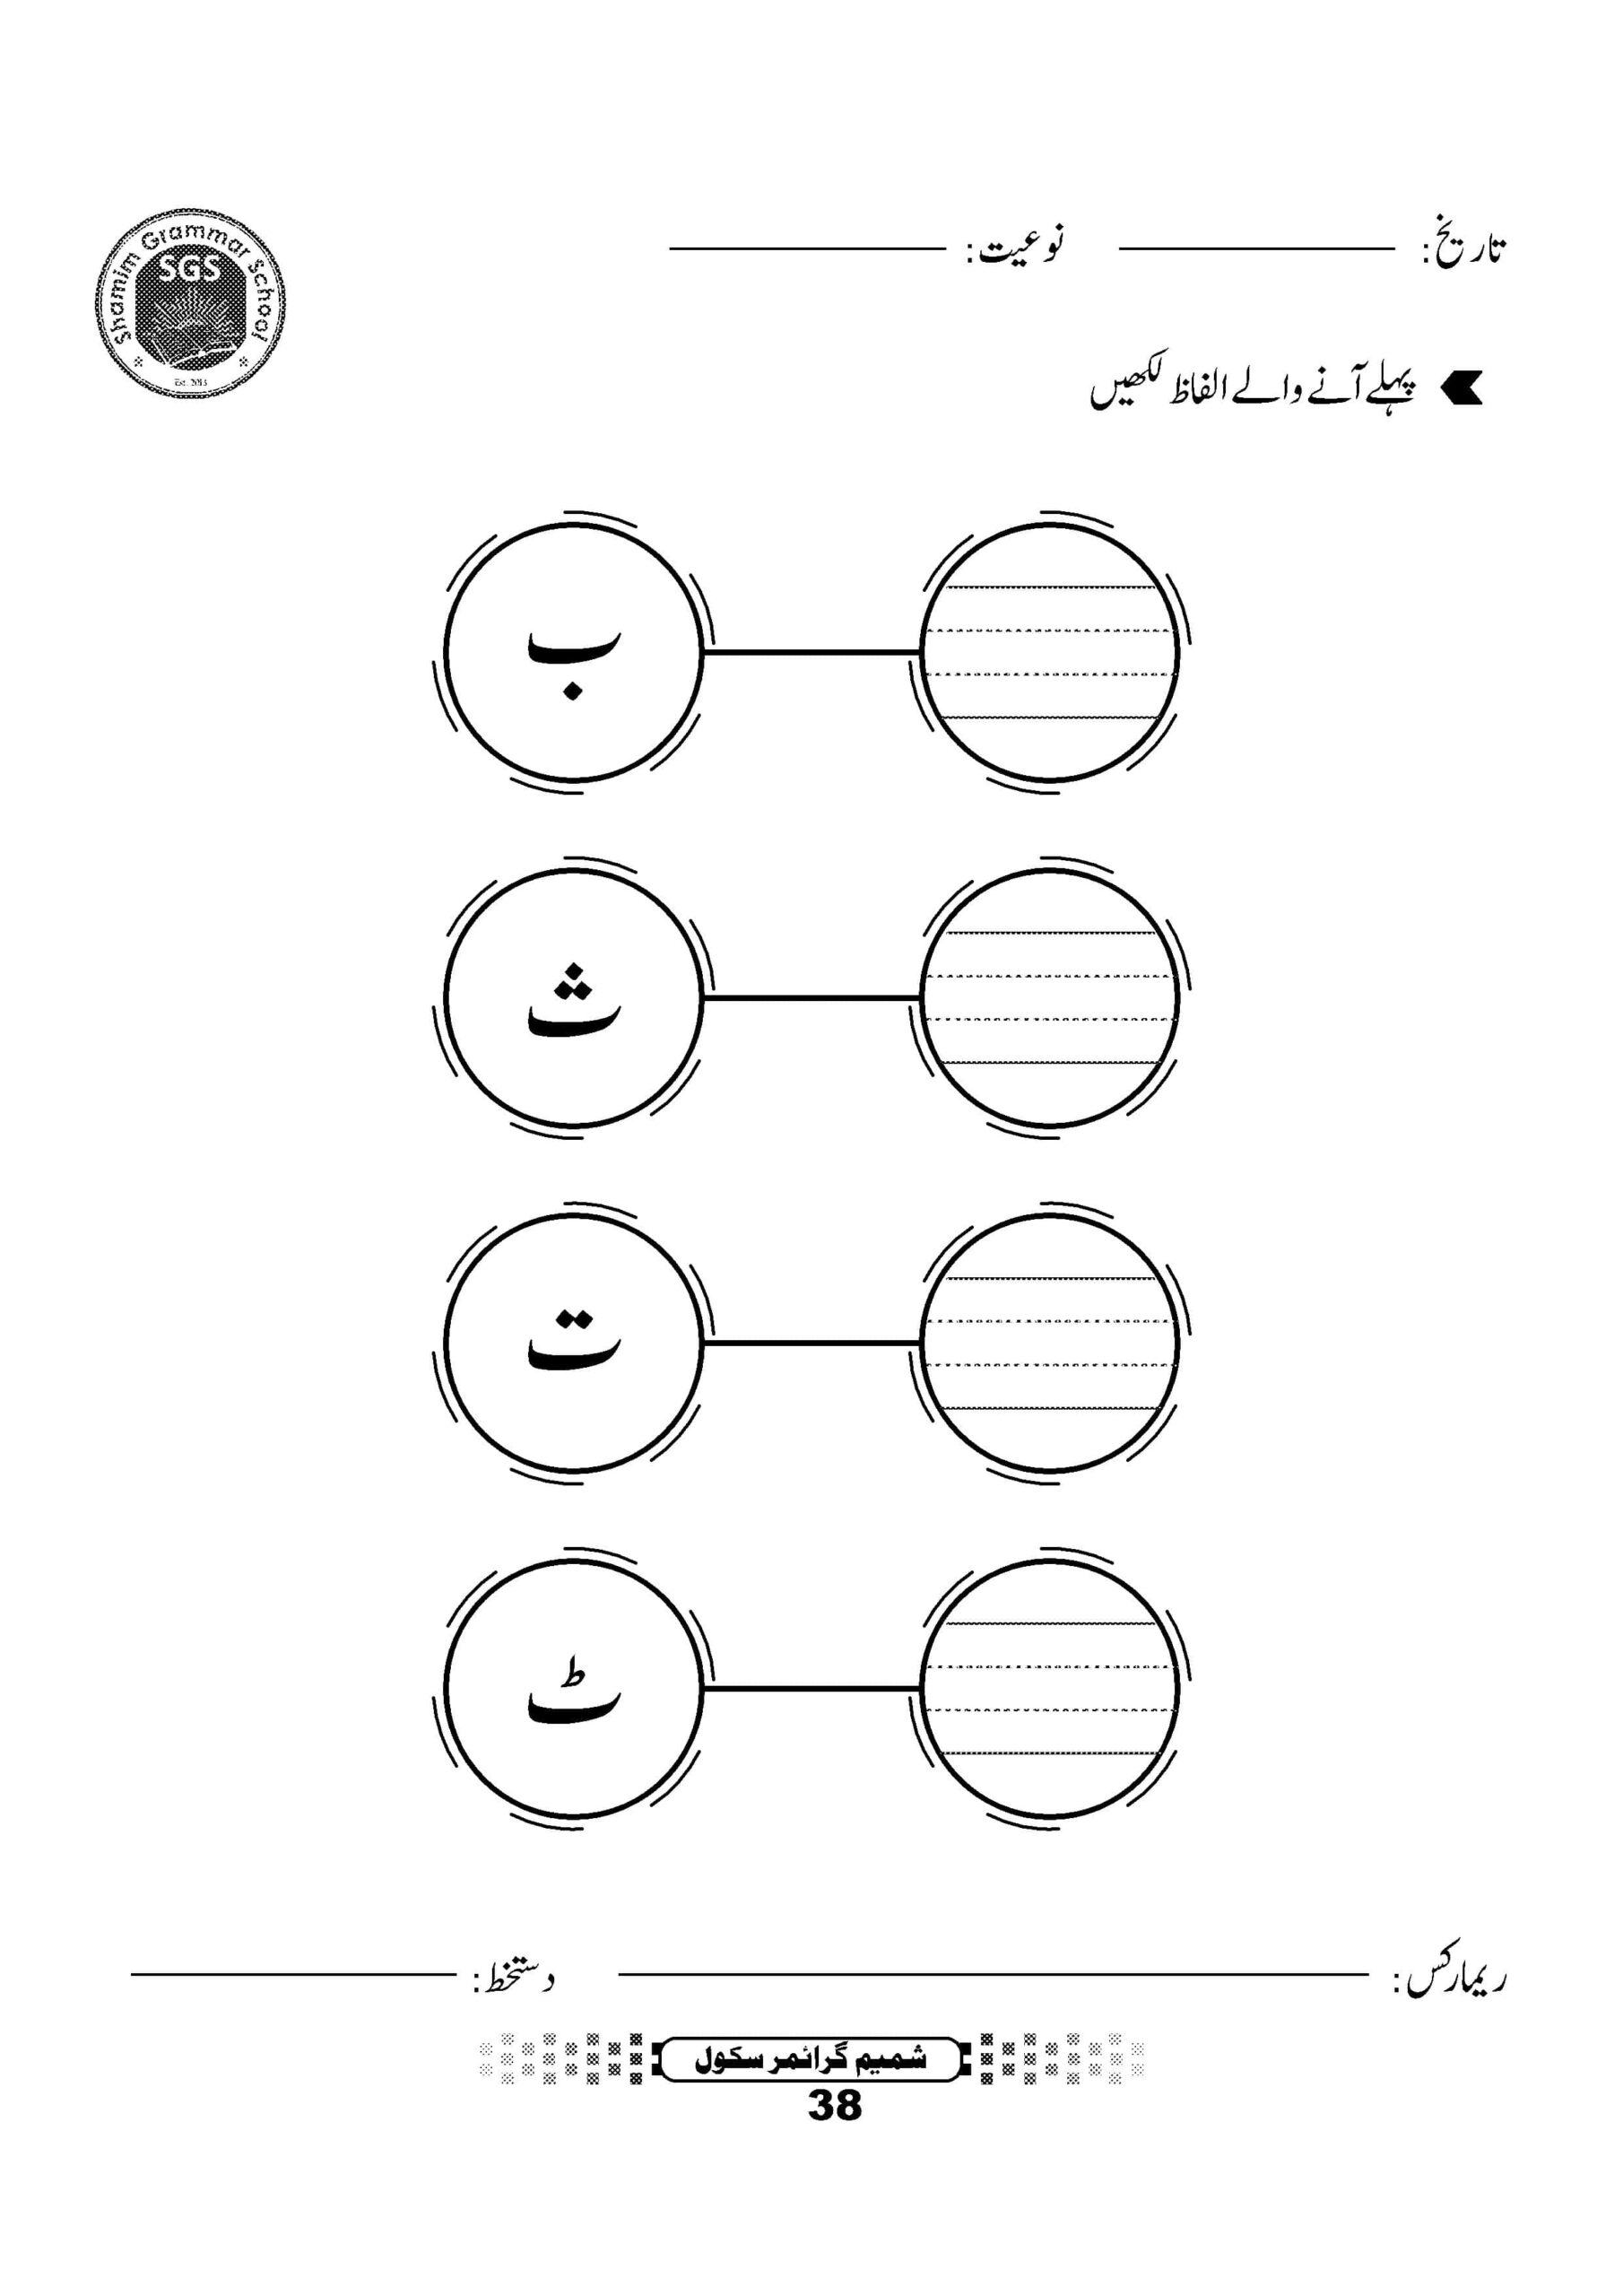 Urdu Alphabets Worksheets Bay Say | Printable Worksheets And